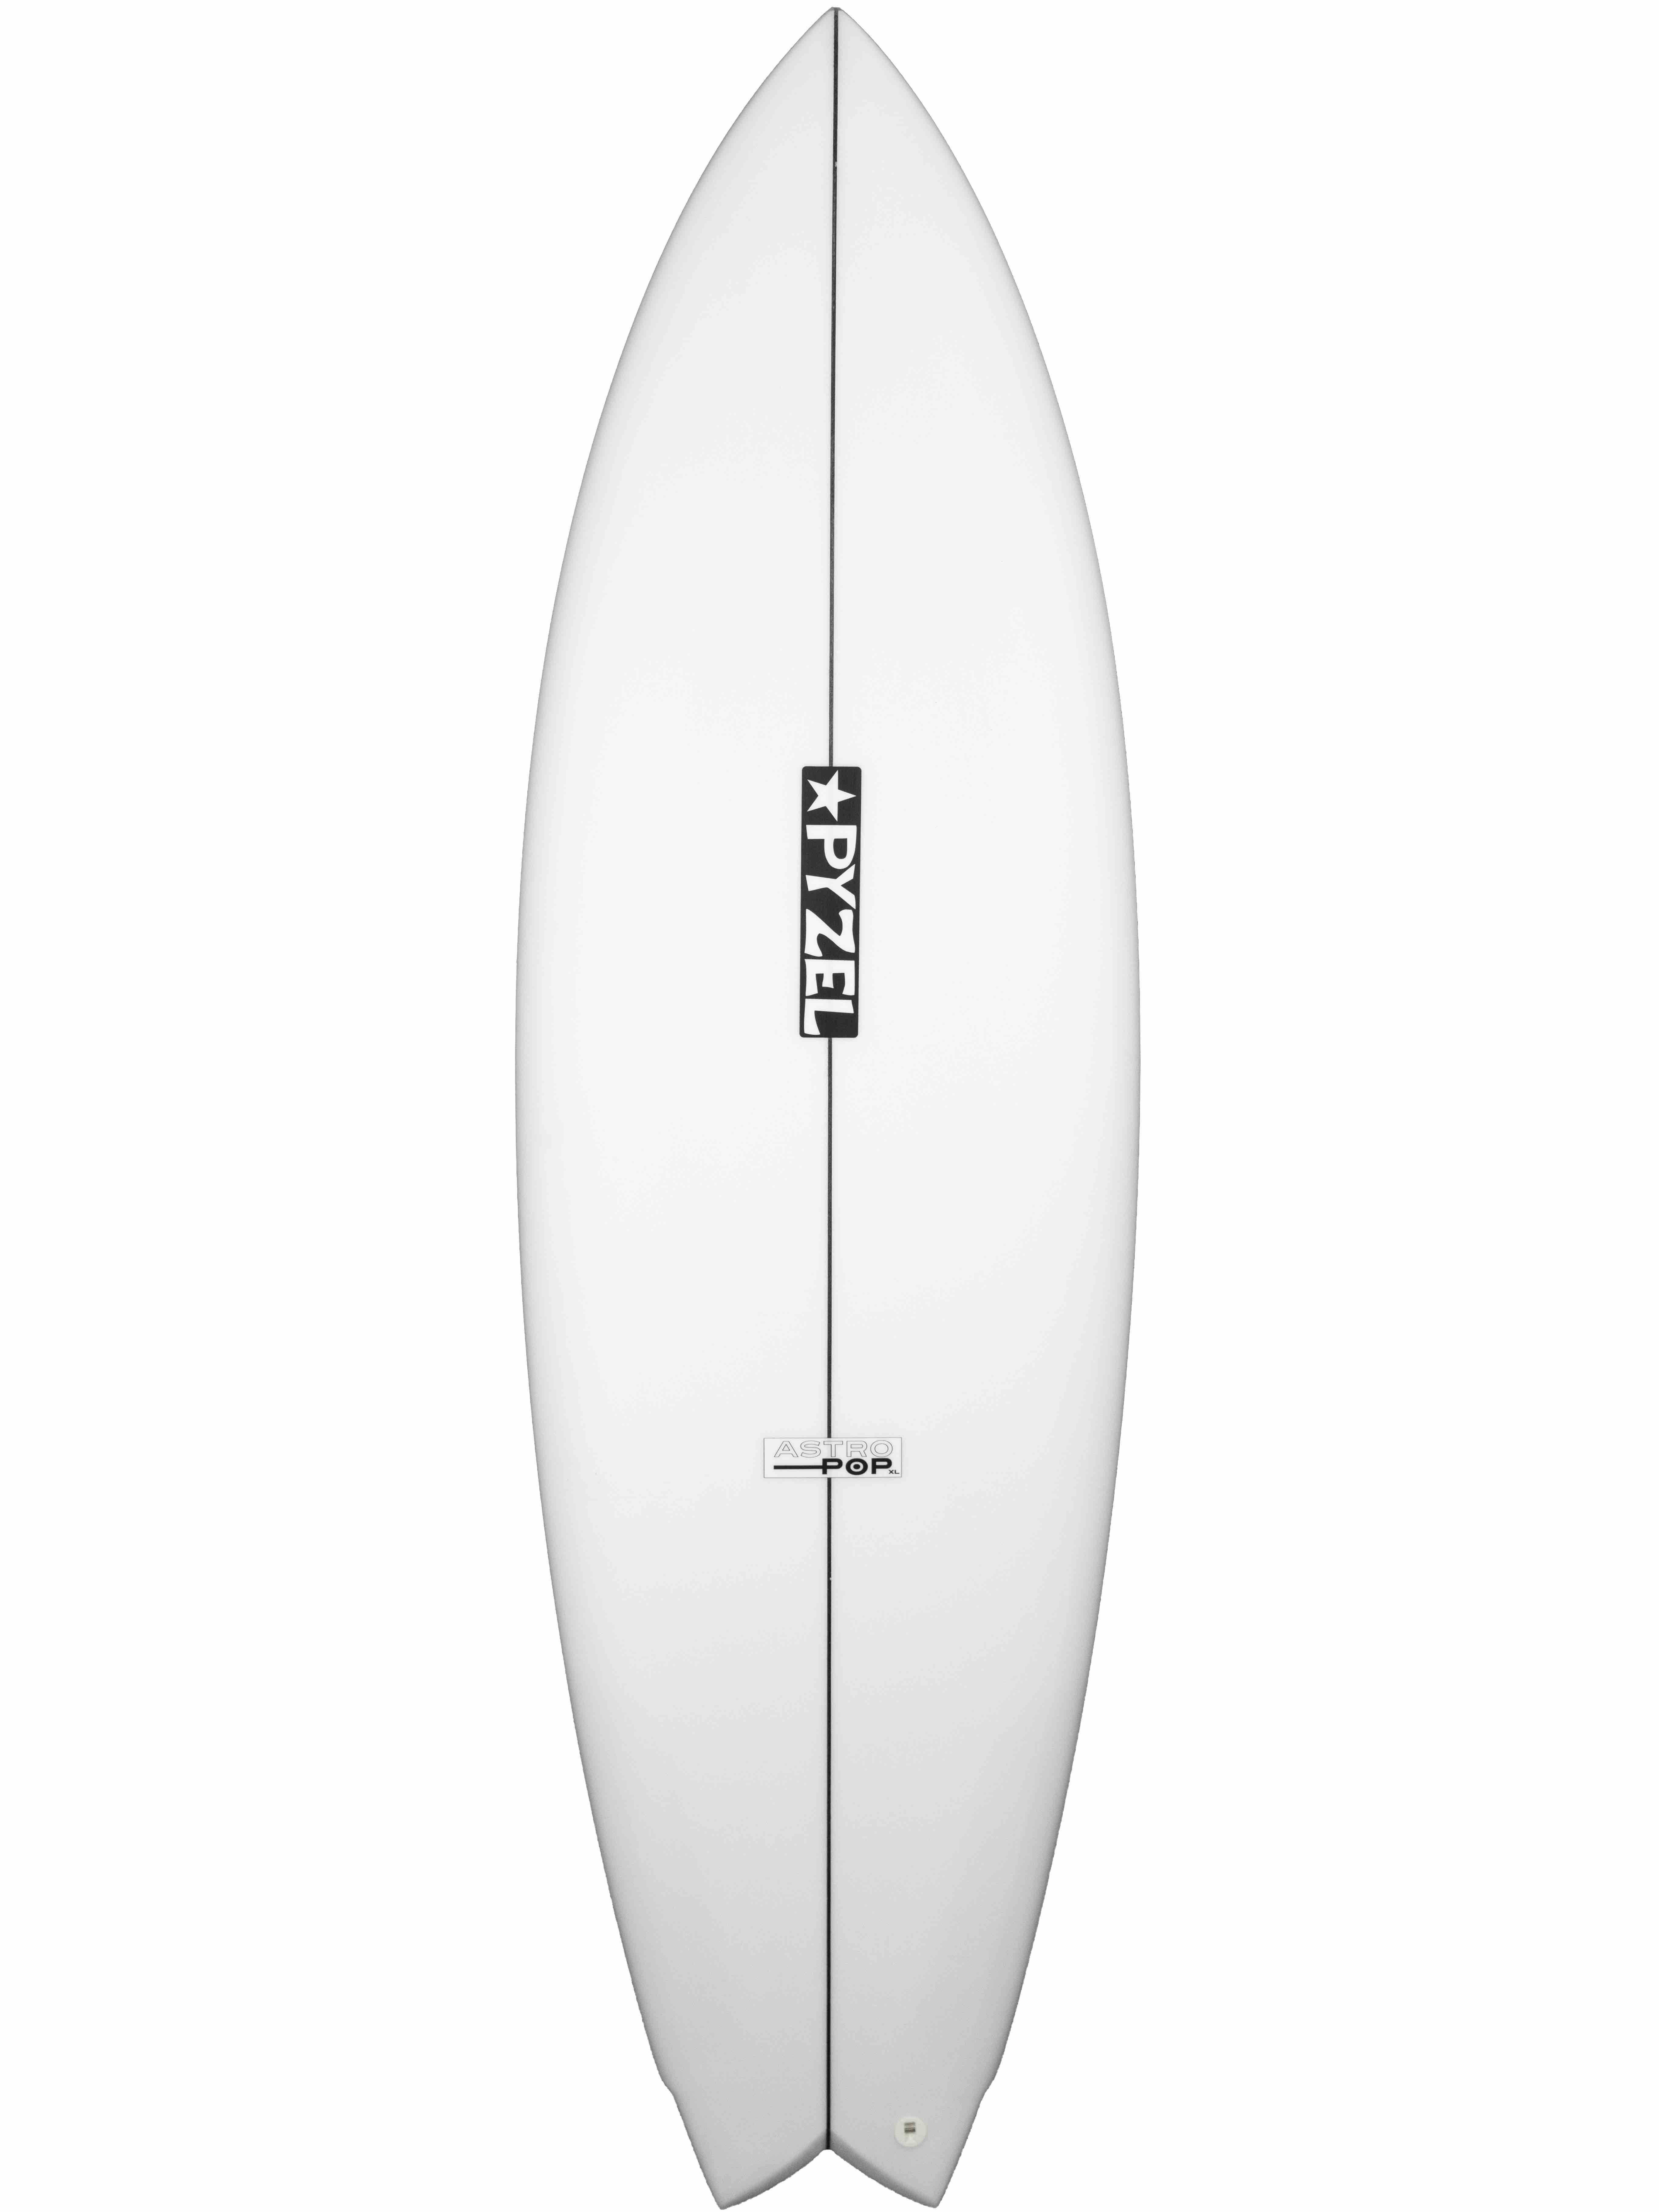 Pyzel Surfboards - Phantom XL